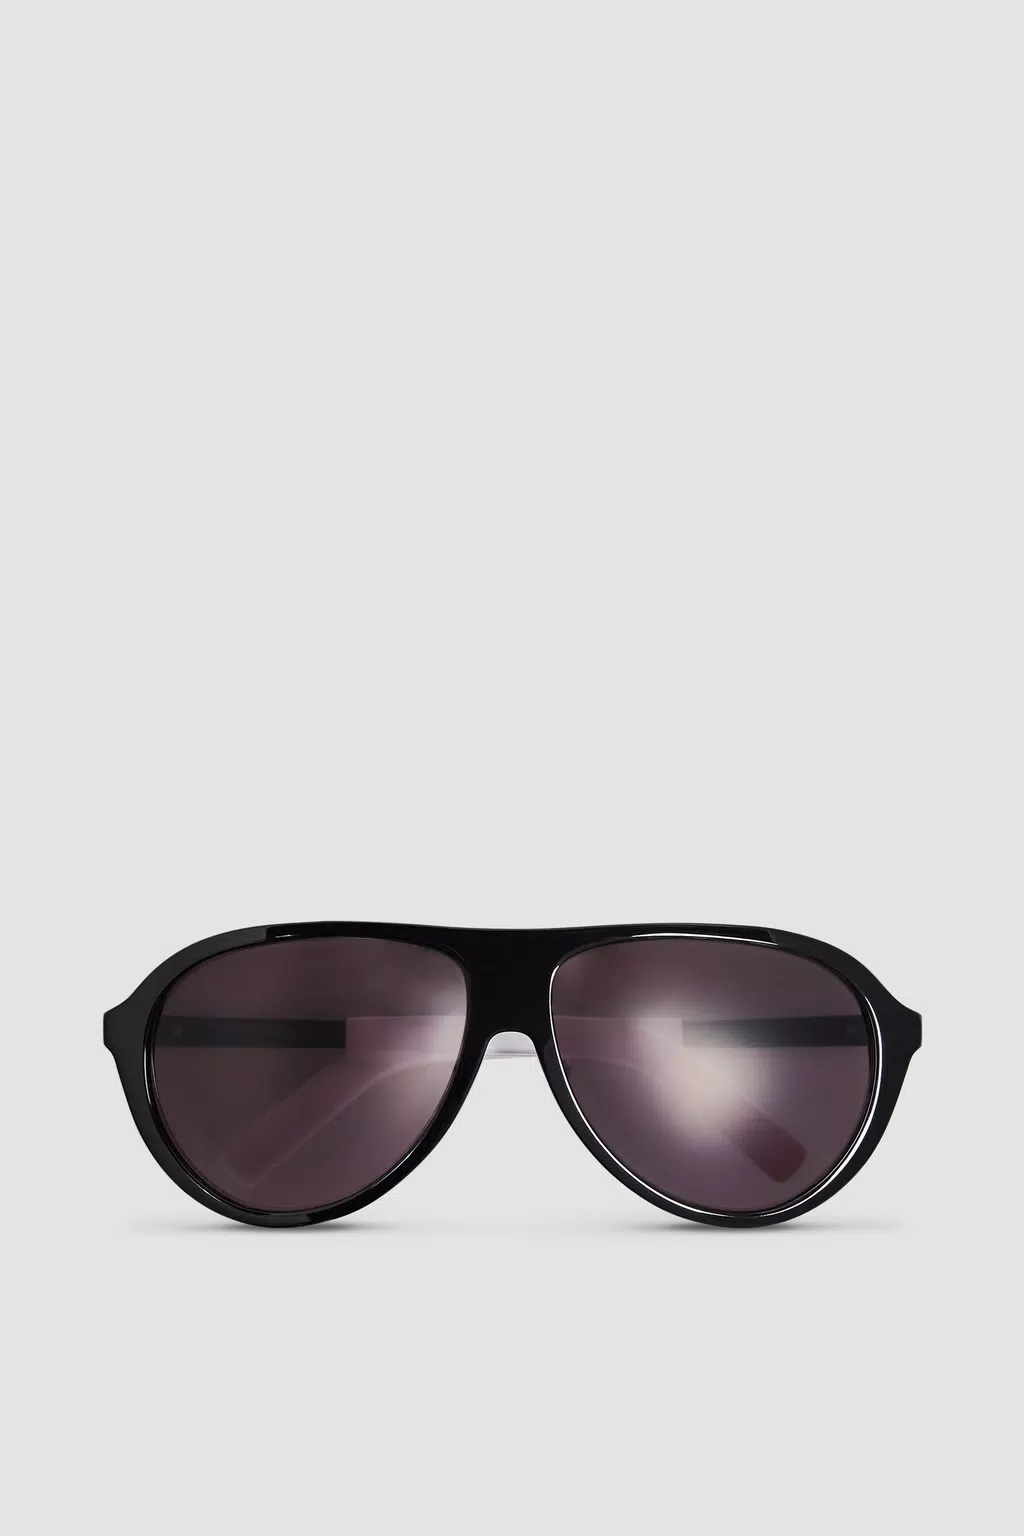 Sunglasses for Men - Eyewear, Shades & Ski Goggles